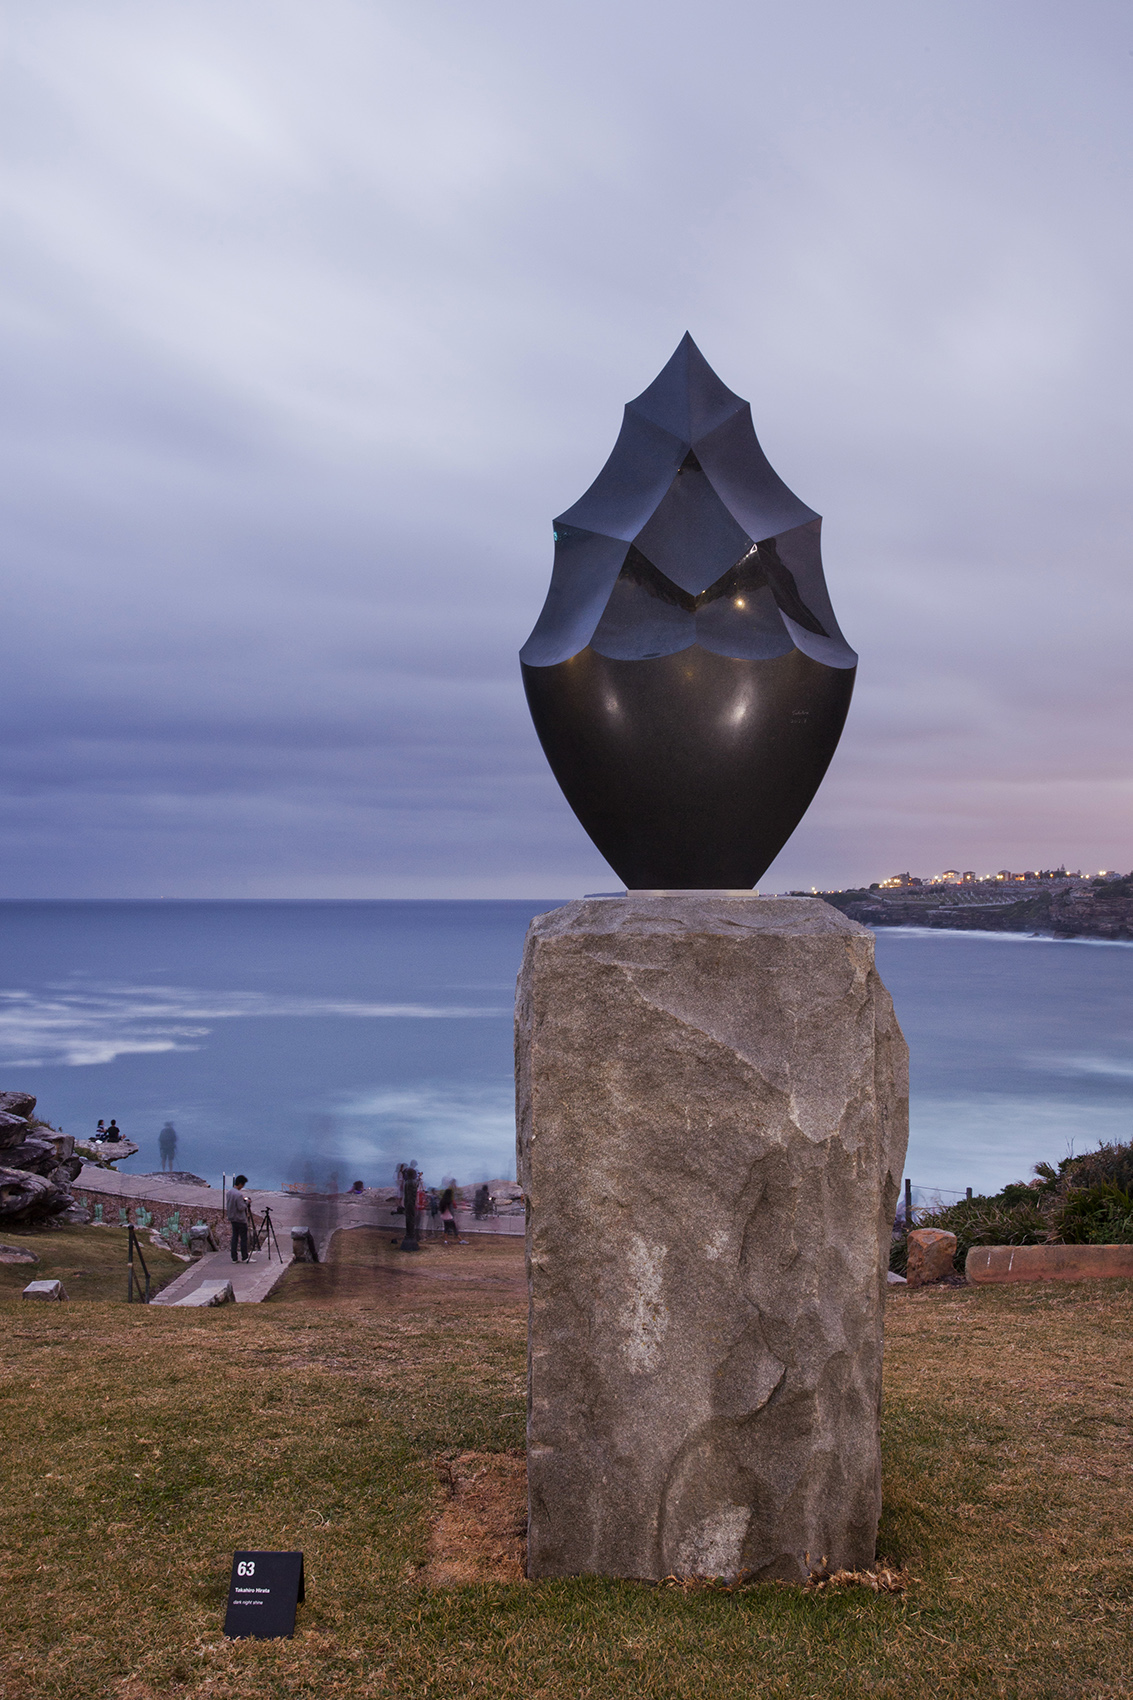 dark night shine: - Sculpture by the Sea